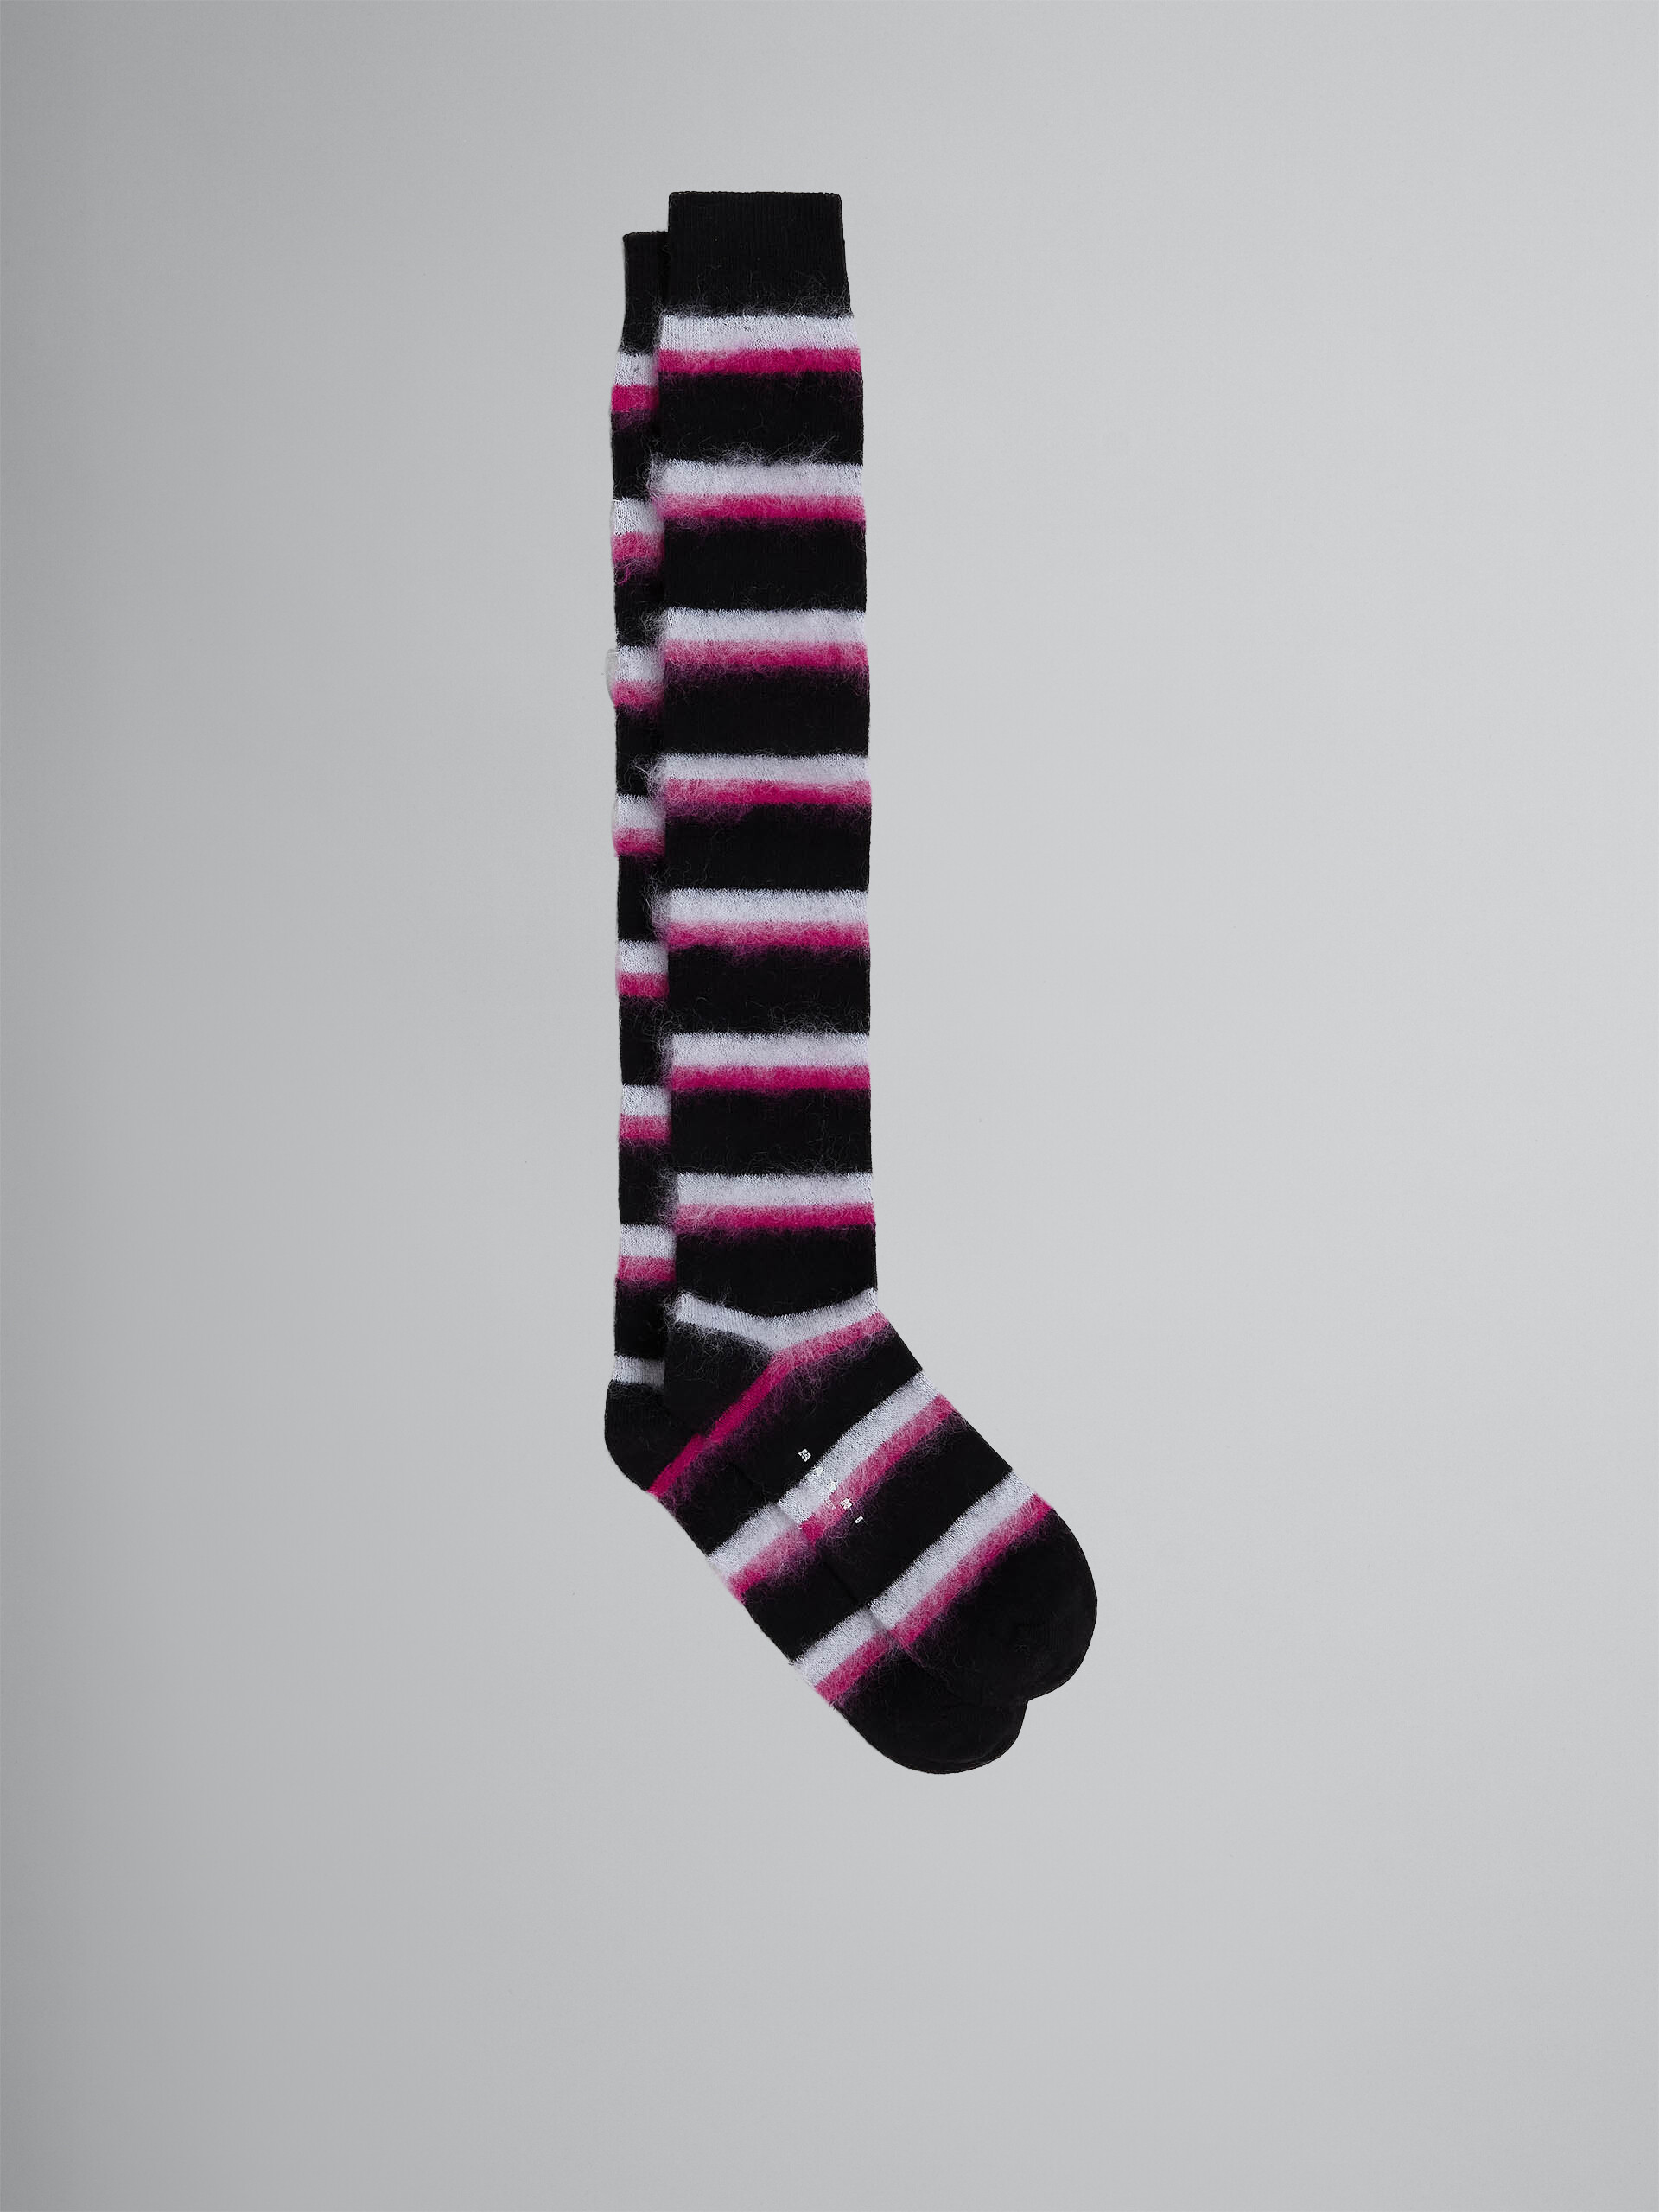 Mohair and cotton socks - Socks - Image 1